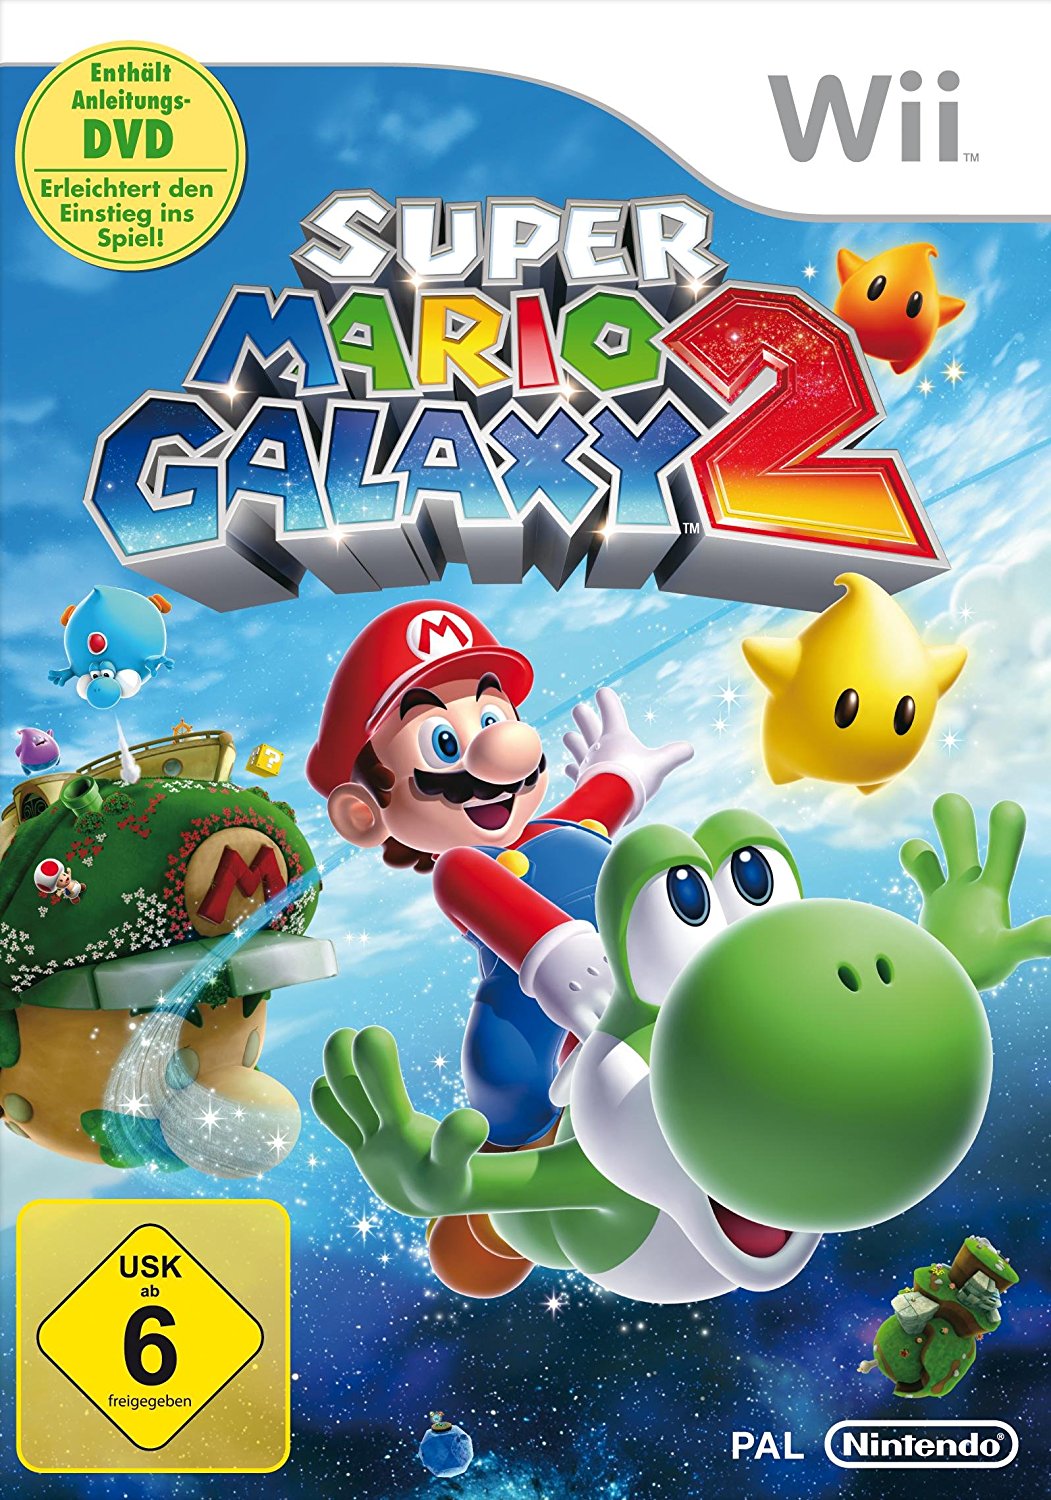 Featured image for “Platz 2 – Wii: SUPER MARIO GALAXY 2 (Nintendo)”